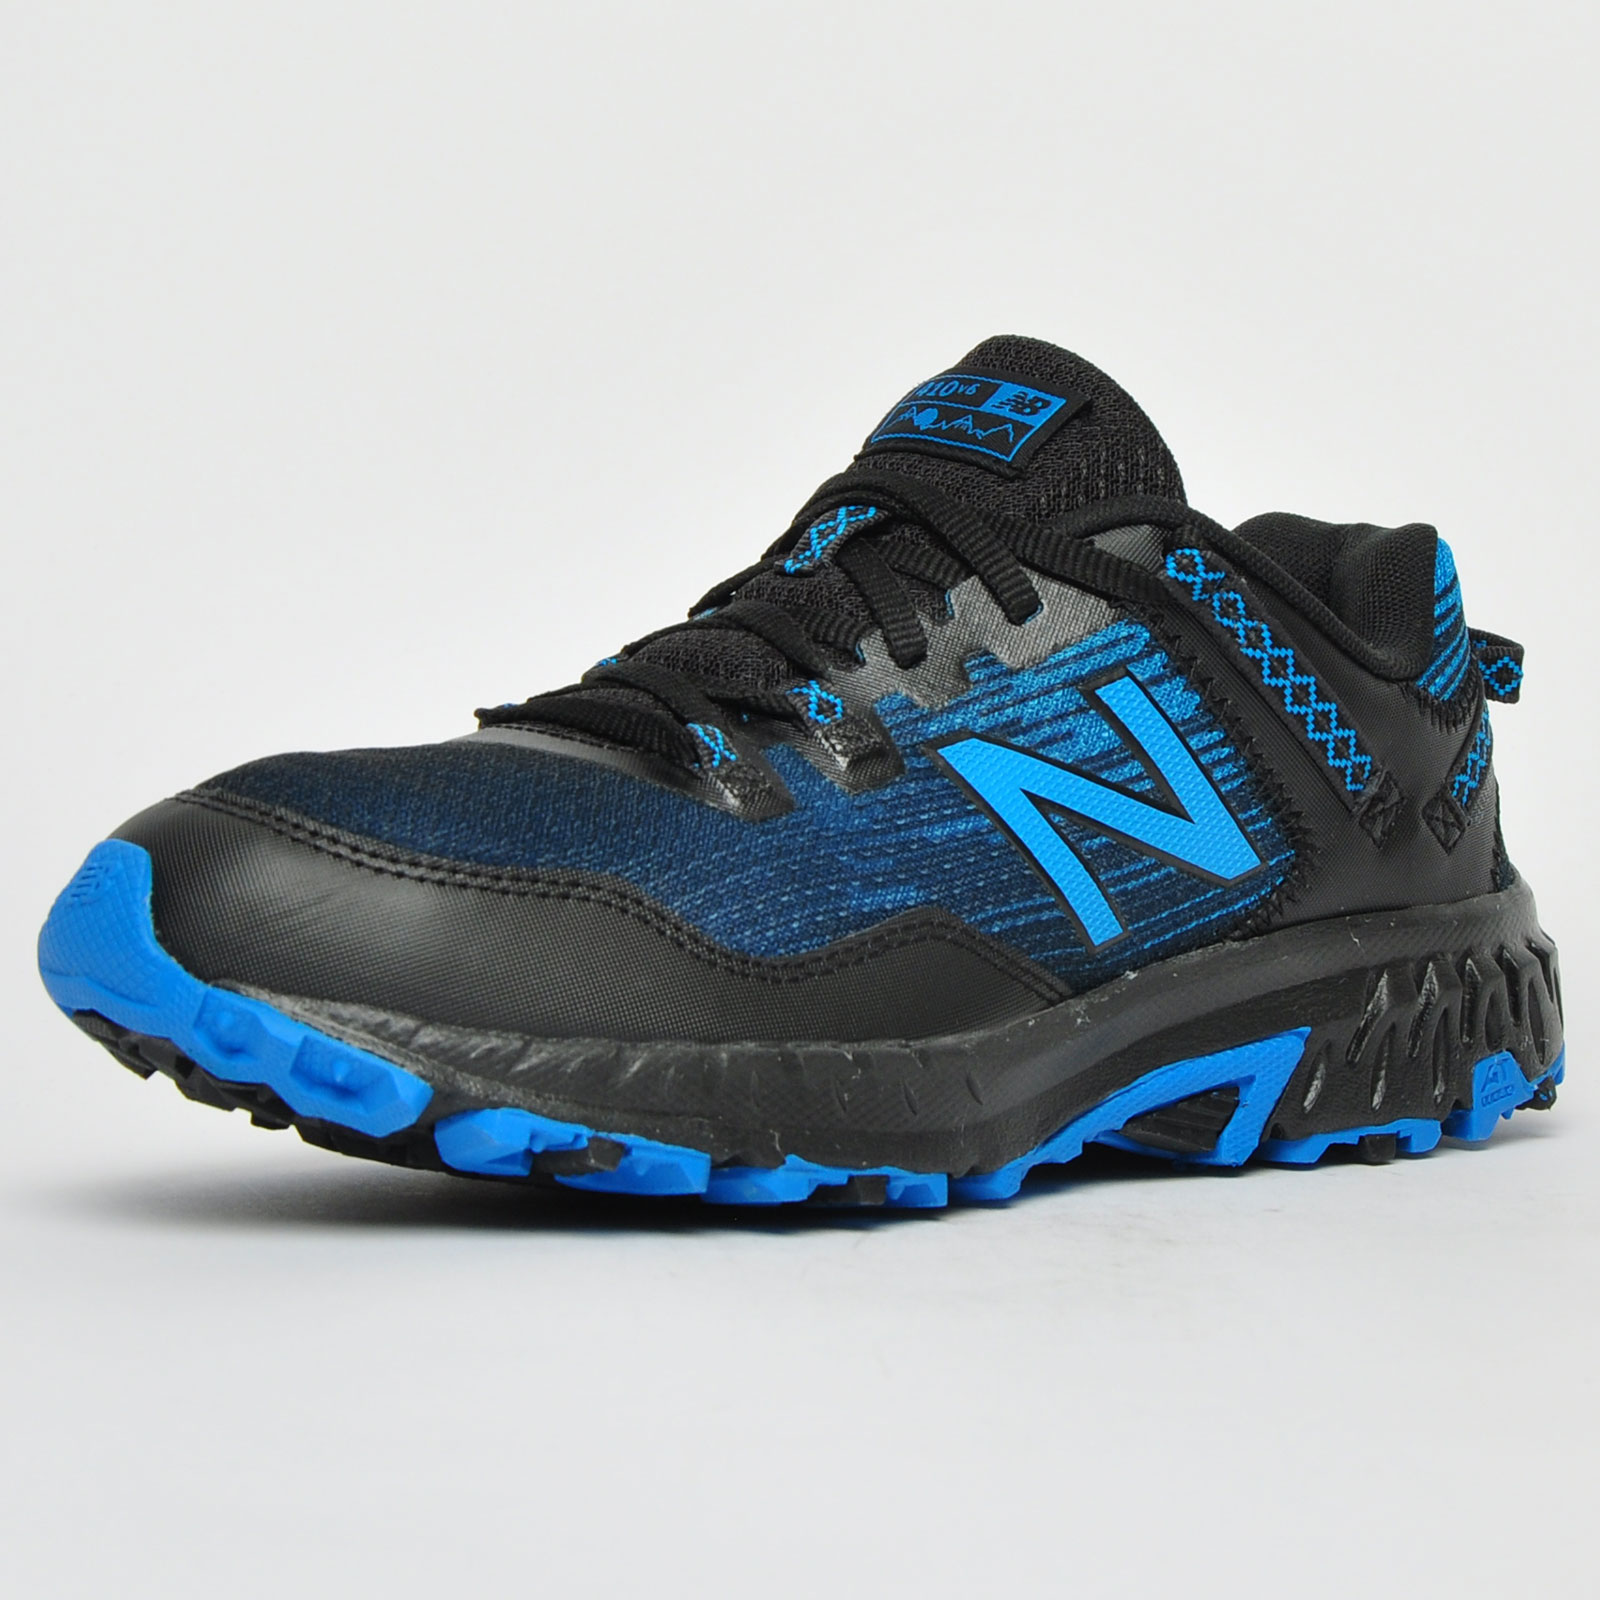 New Balance MT 410 v6 Men's All-Terrain Trail Running Hiking Shoes ...